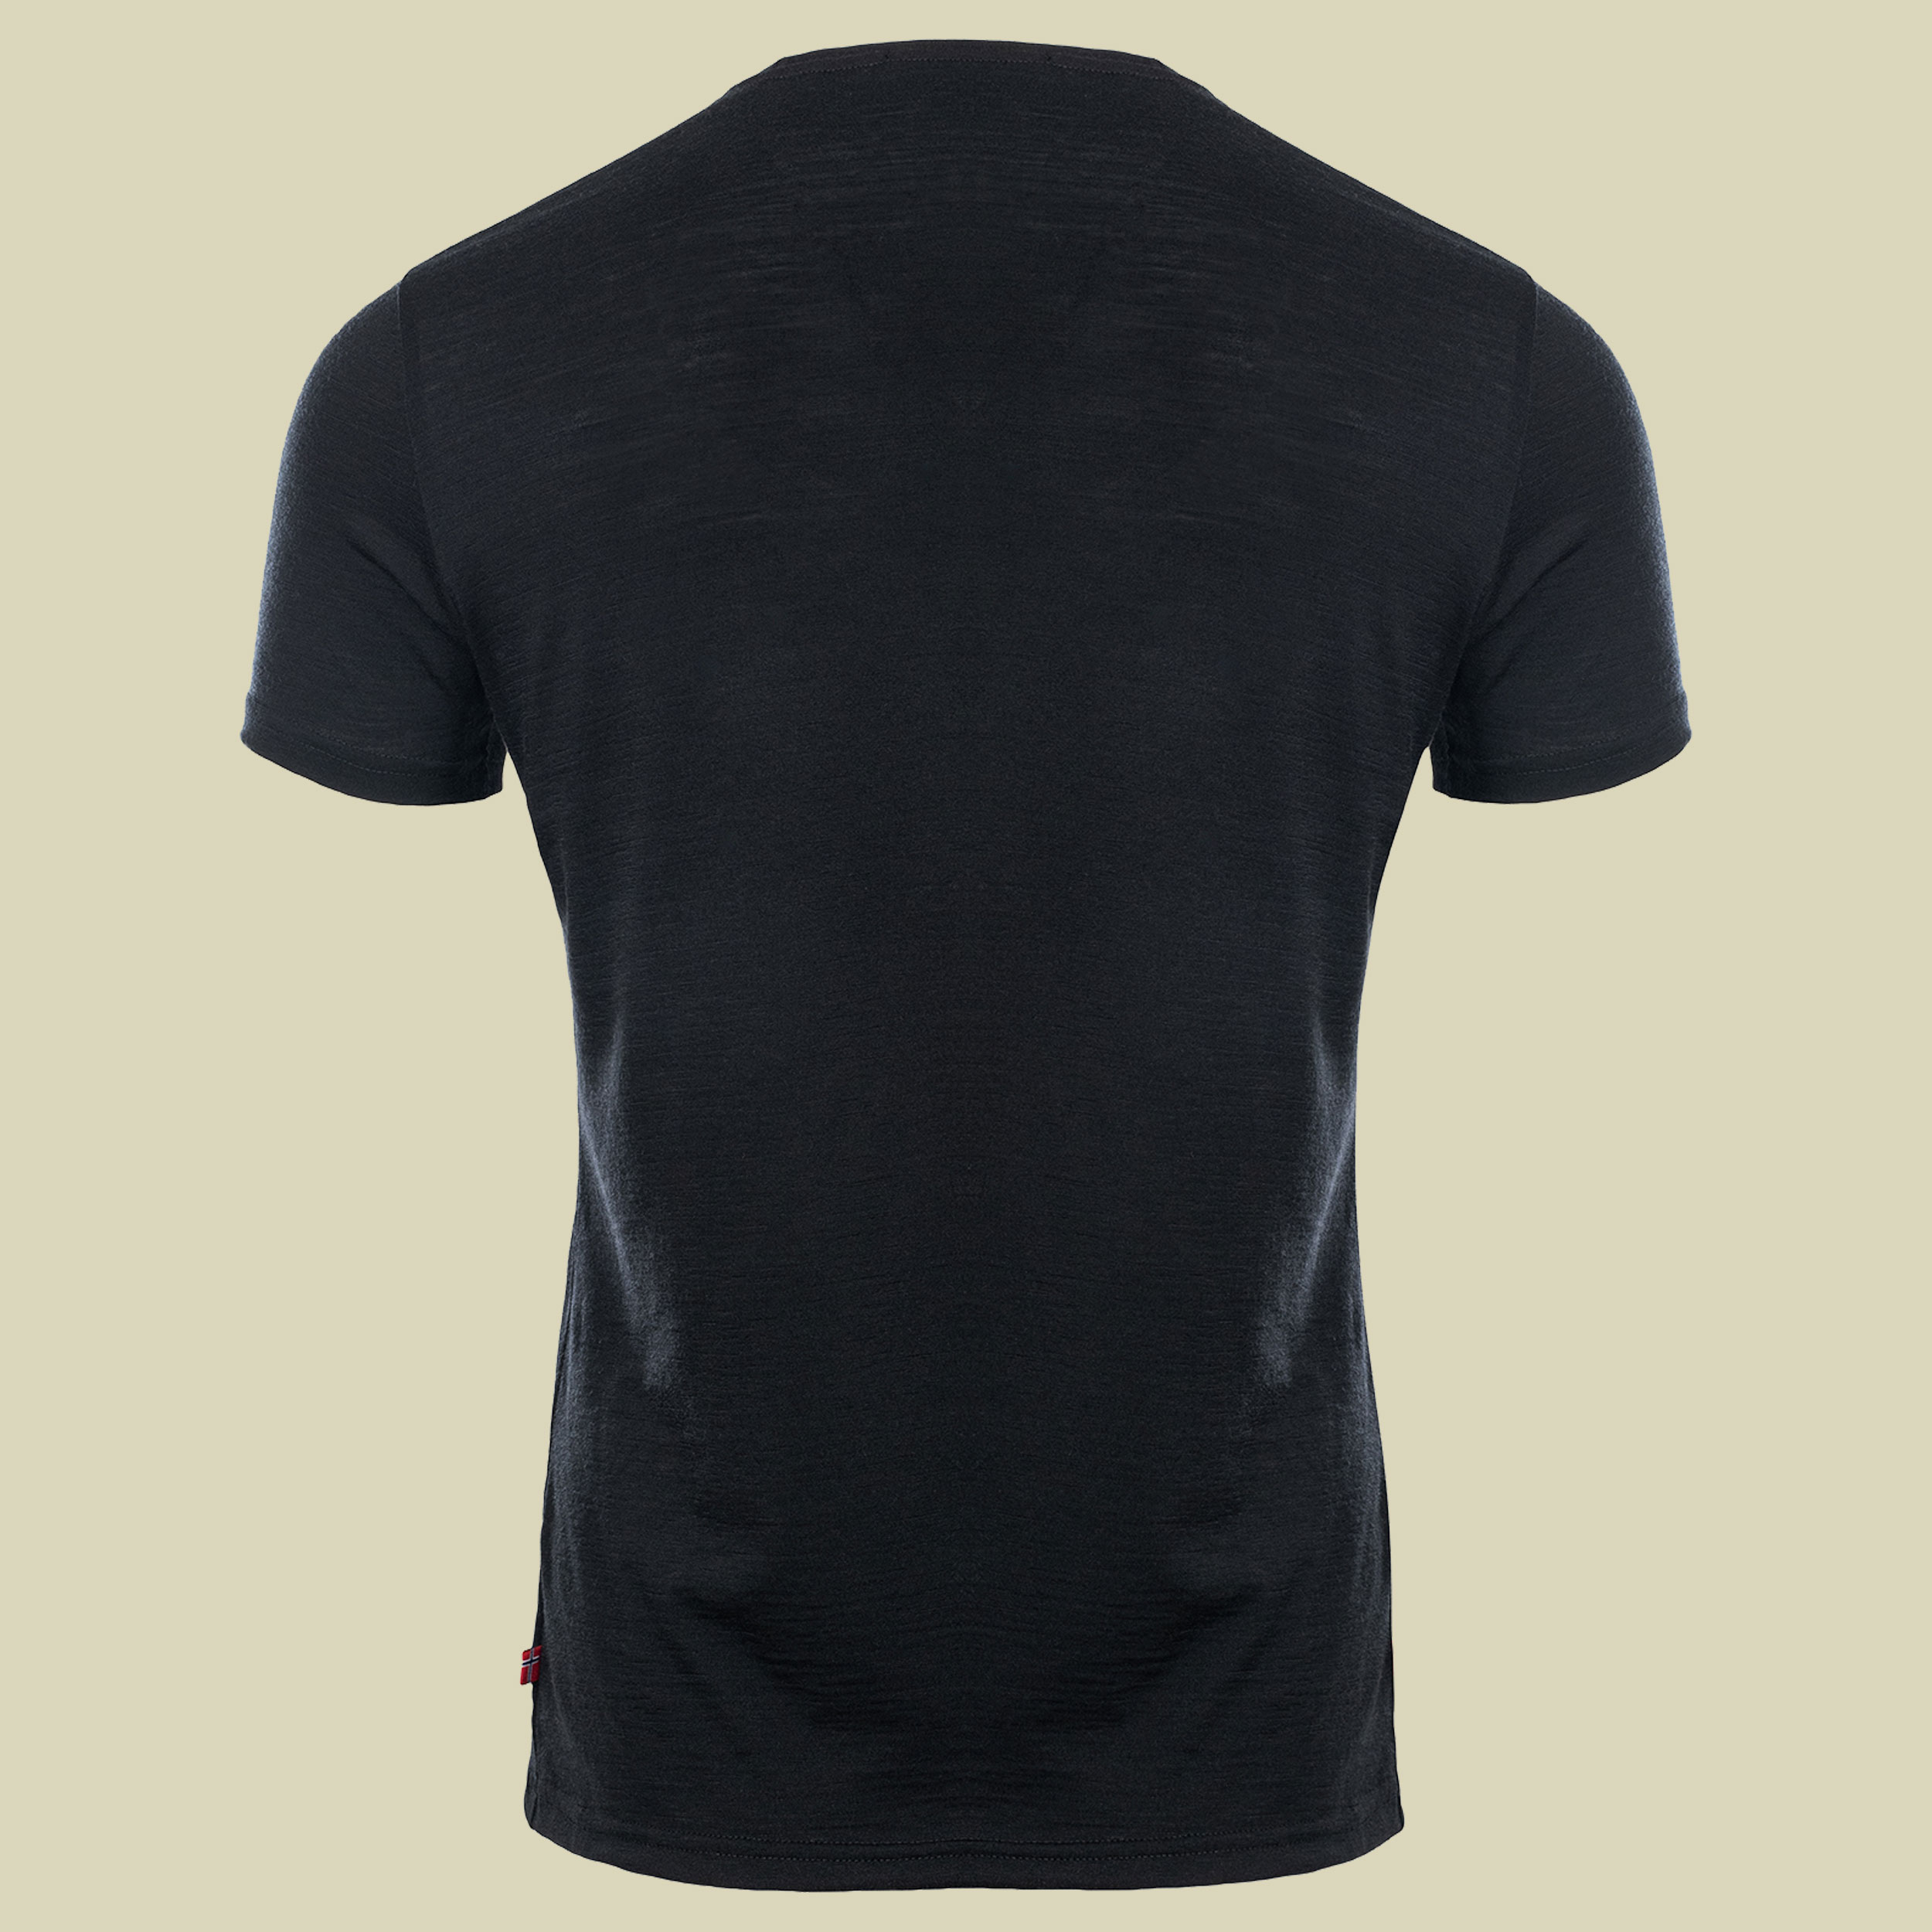 LightWool T-Shirt Men schwarz S - jet black